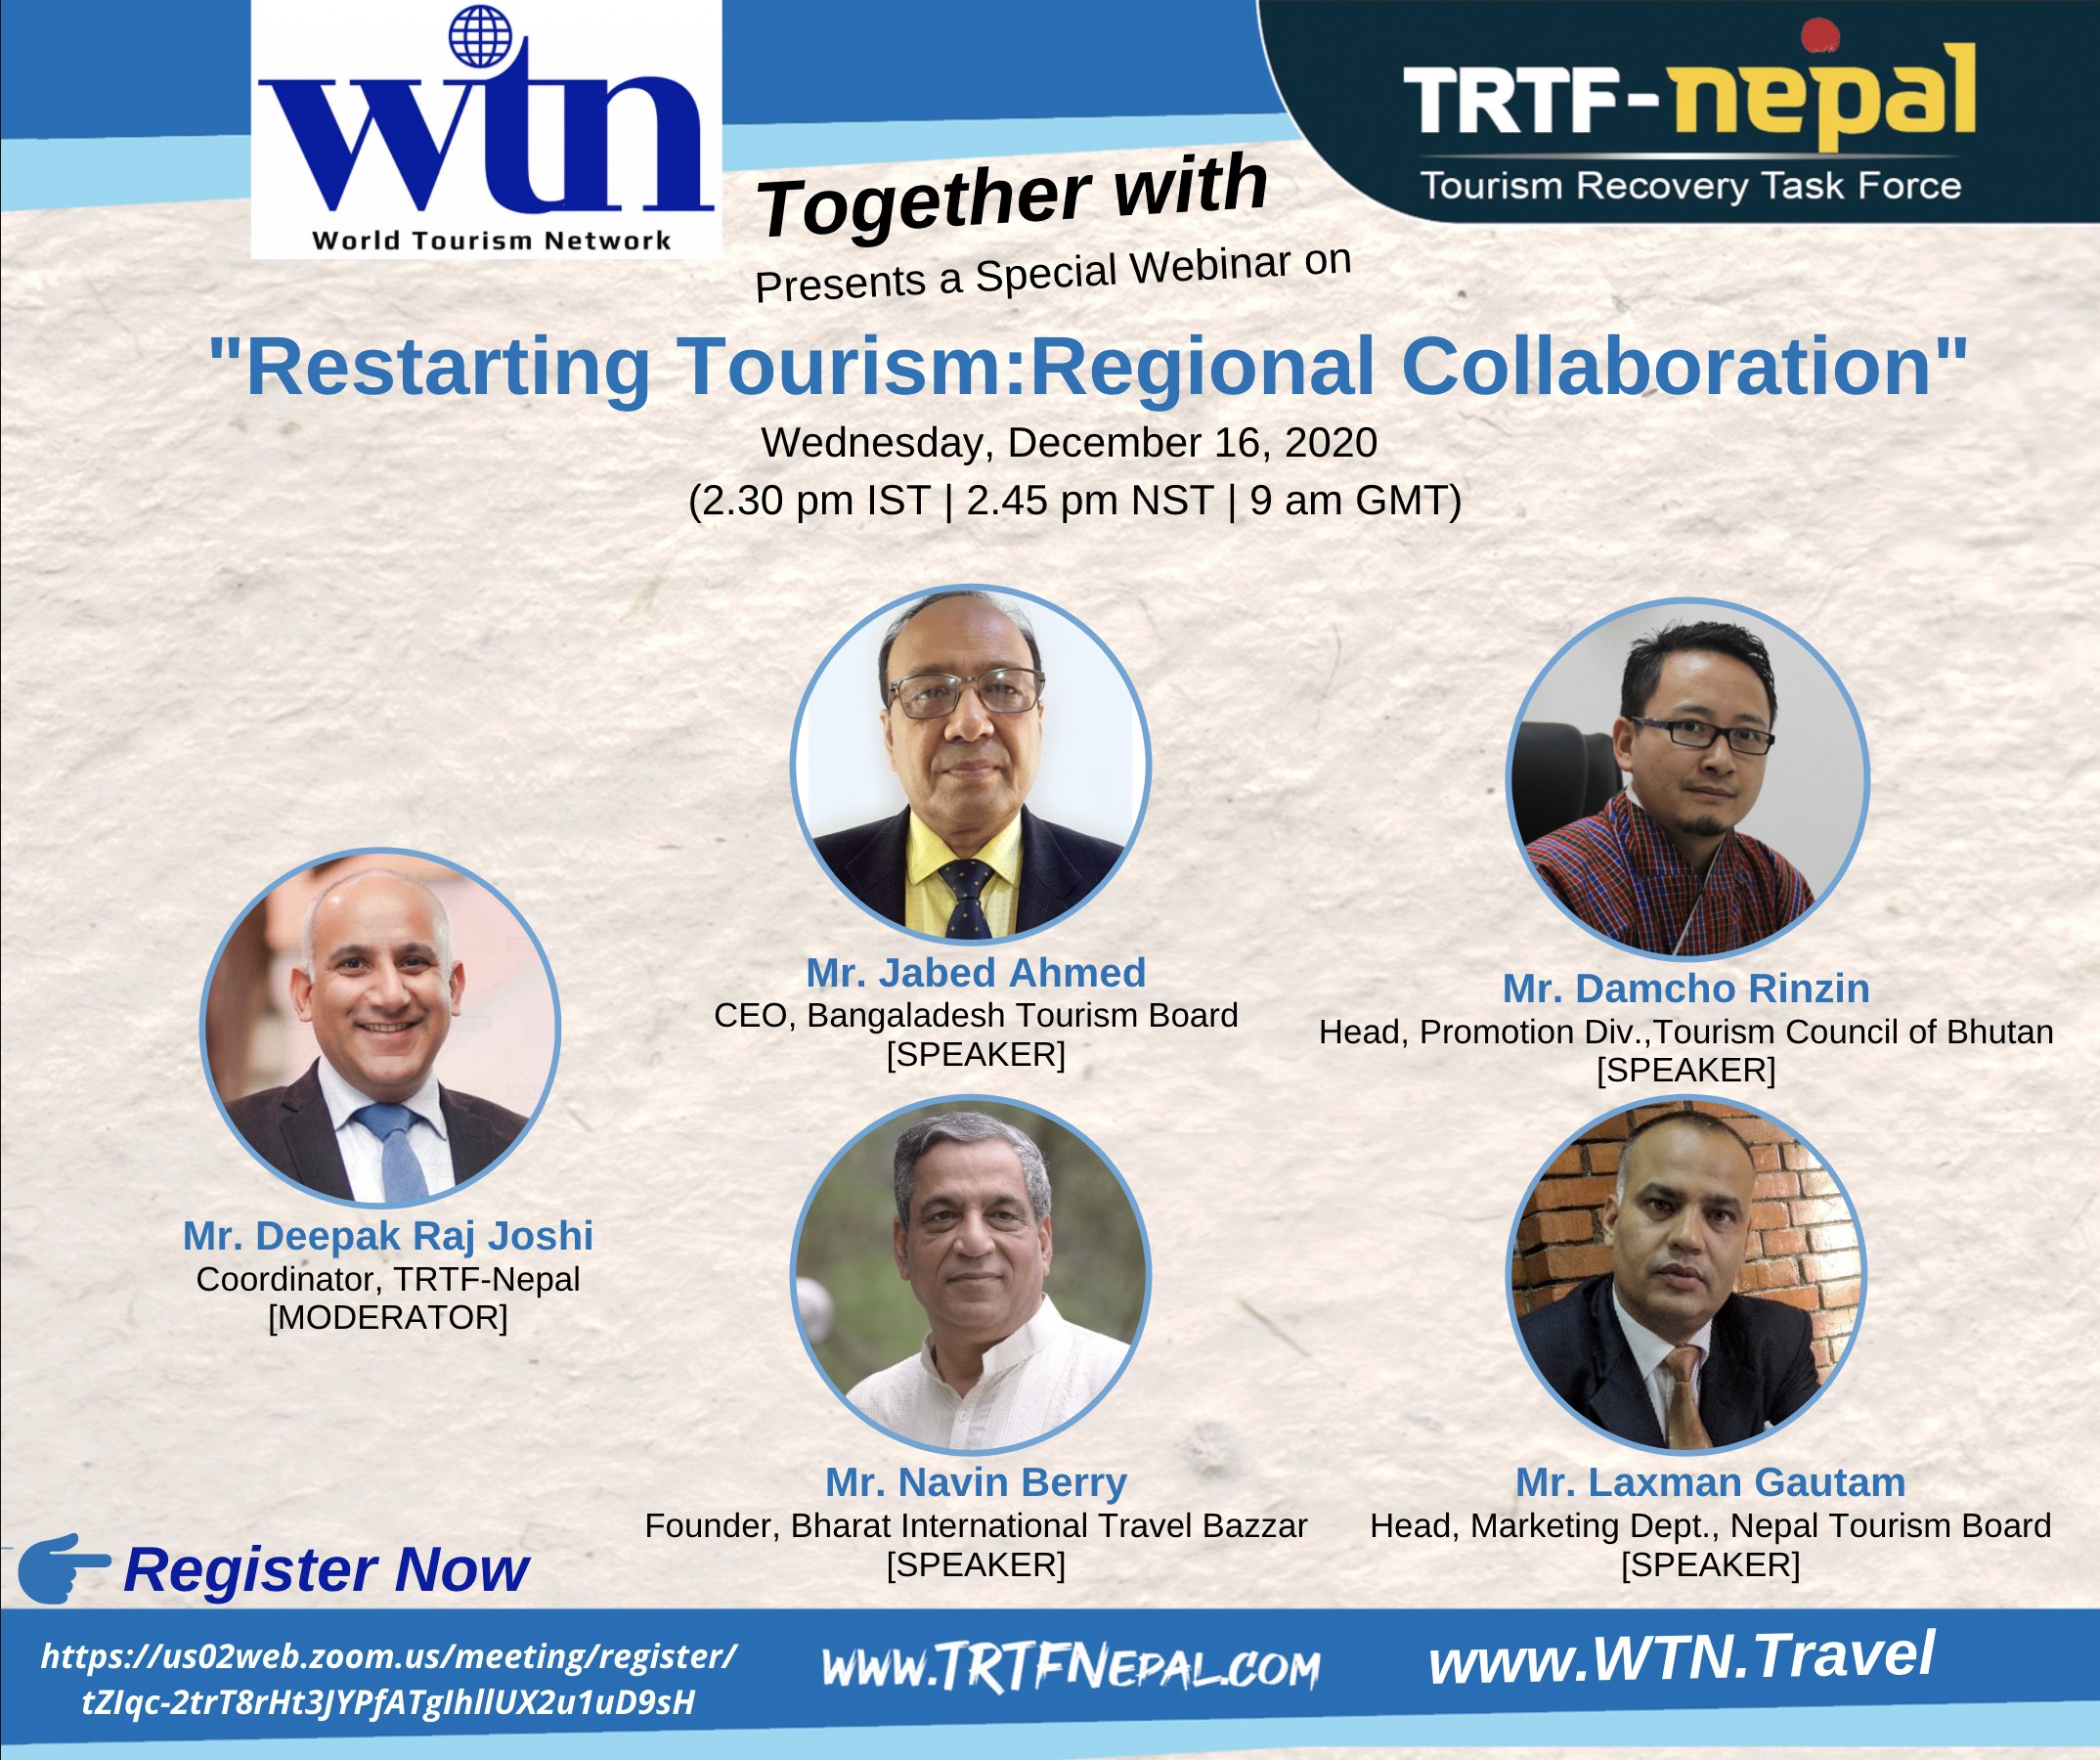 A Special Webinar on "Restarting Tourism: Regional Collaboration"